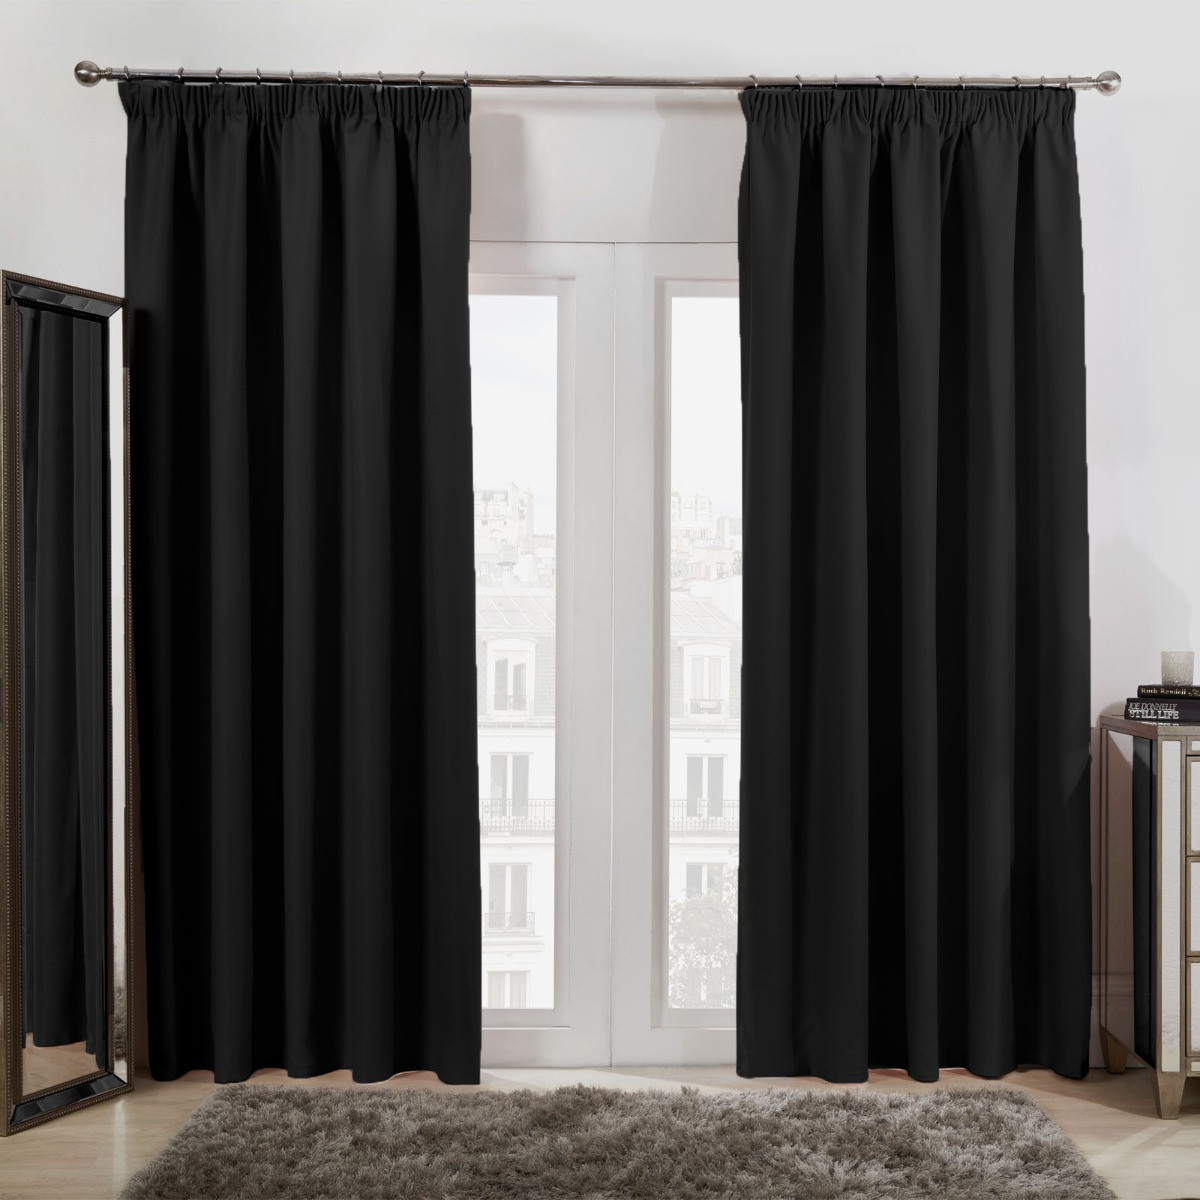 Dreamscene Pencil Pleat 1 Thermal Door Curtain Panel - Black, 66" x 84">